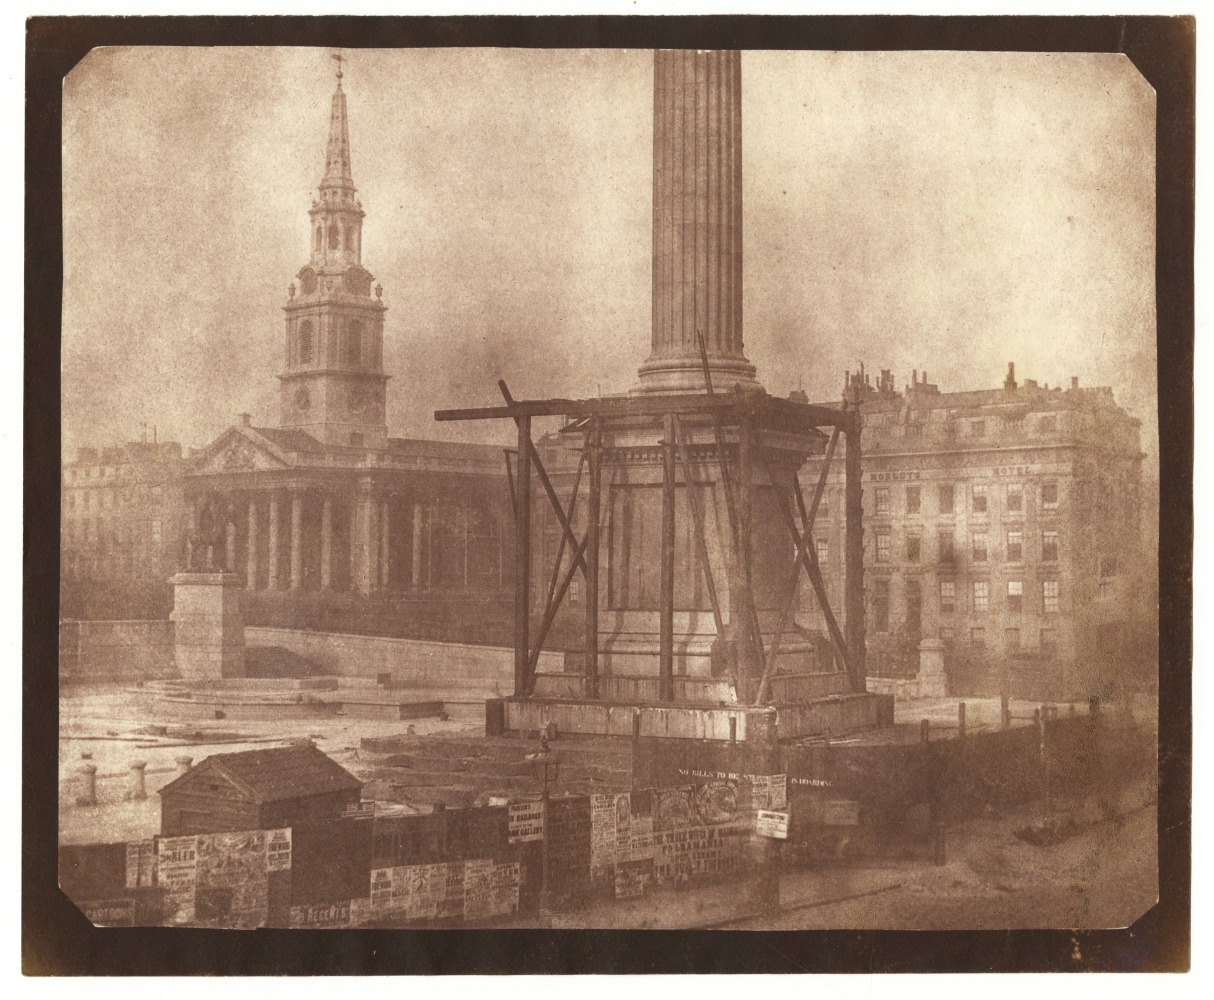 William Henry Fox TALBOT (English, 1800-1877) Nelson's Column under construction, Trafalgar Square, London, first week of April 1844 Salt print from a calotype negative 17.1 x 21.2 cm